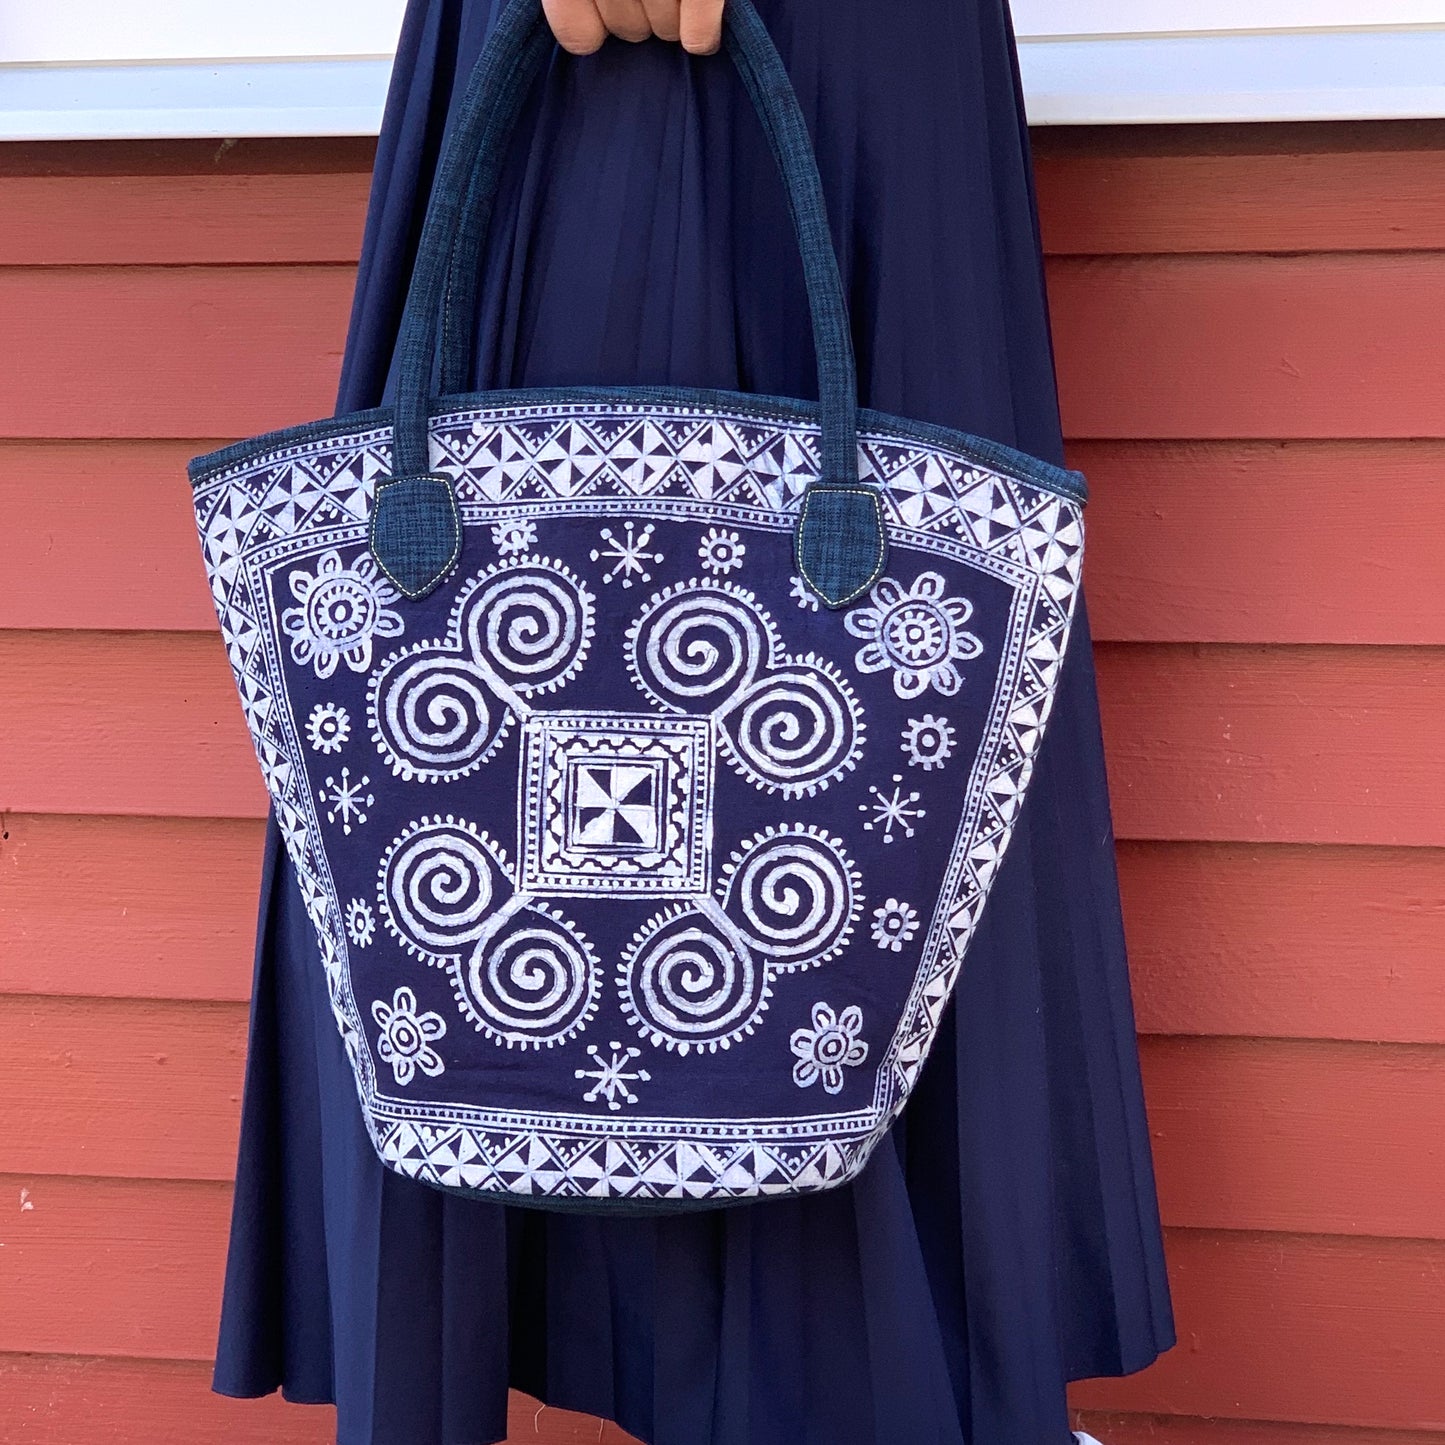 Bucket tote bag, dark blue handles, batik fabric fabric in H'mong pattern